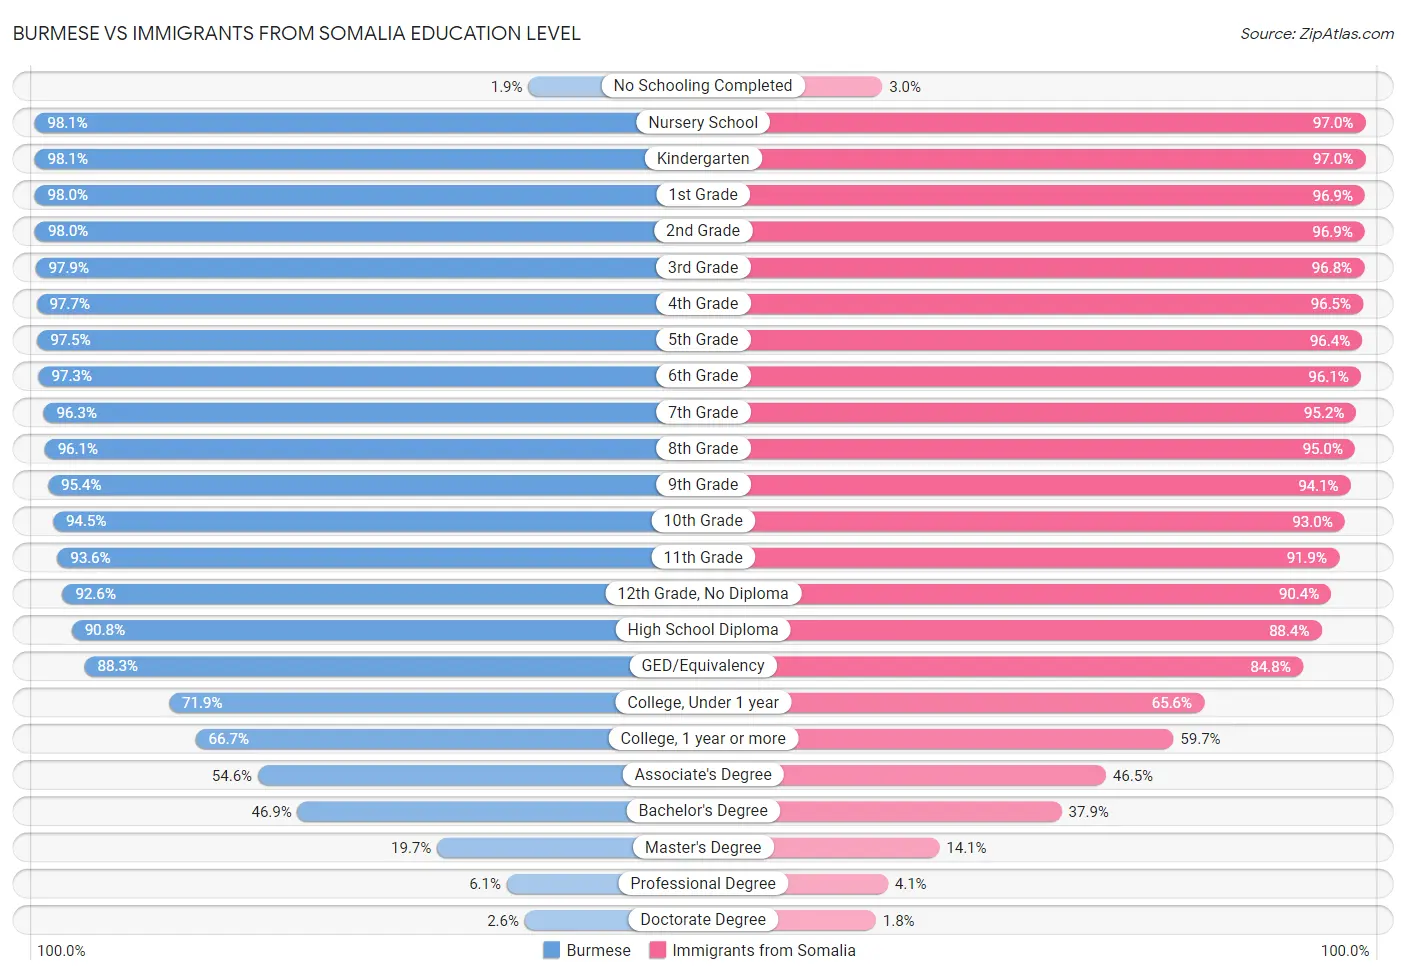 Burmese vs Immigrants from Somalia Education Level